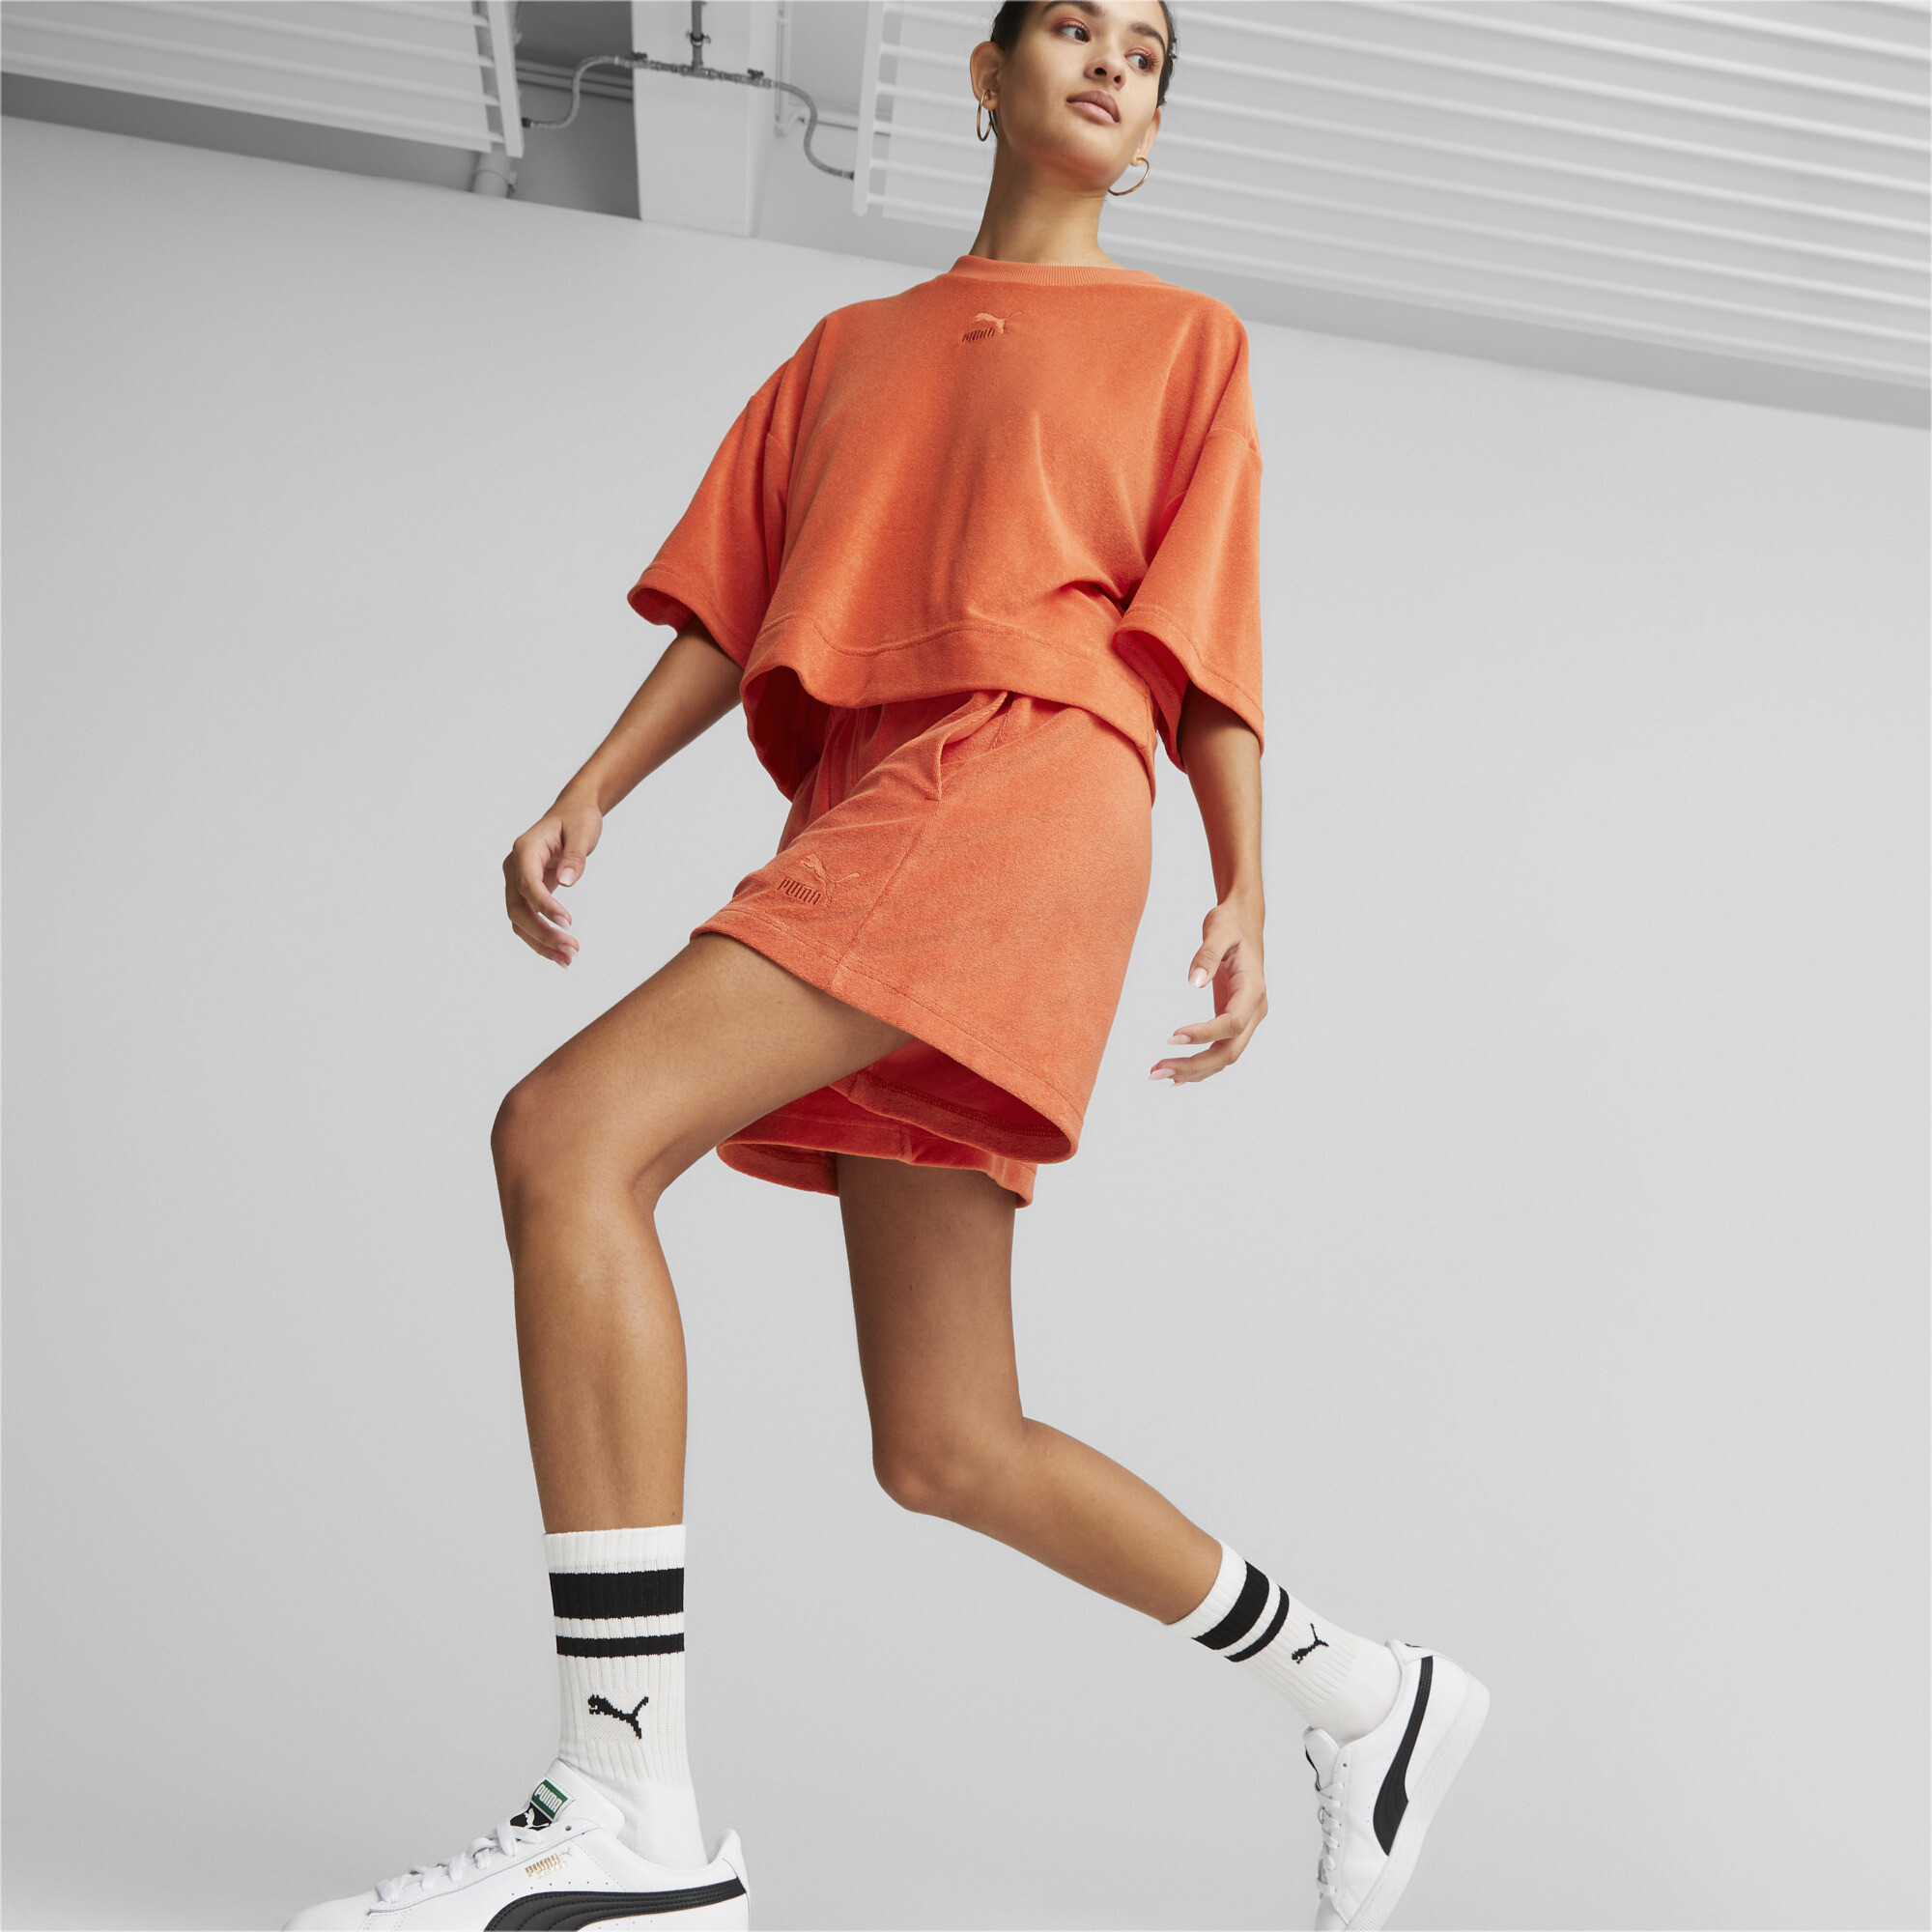 Women's Puma Classics Towelling Shorts, Orange, Size S, Clothing